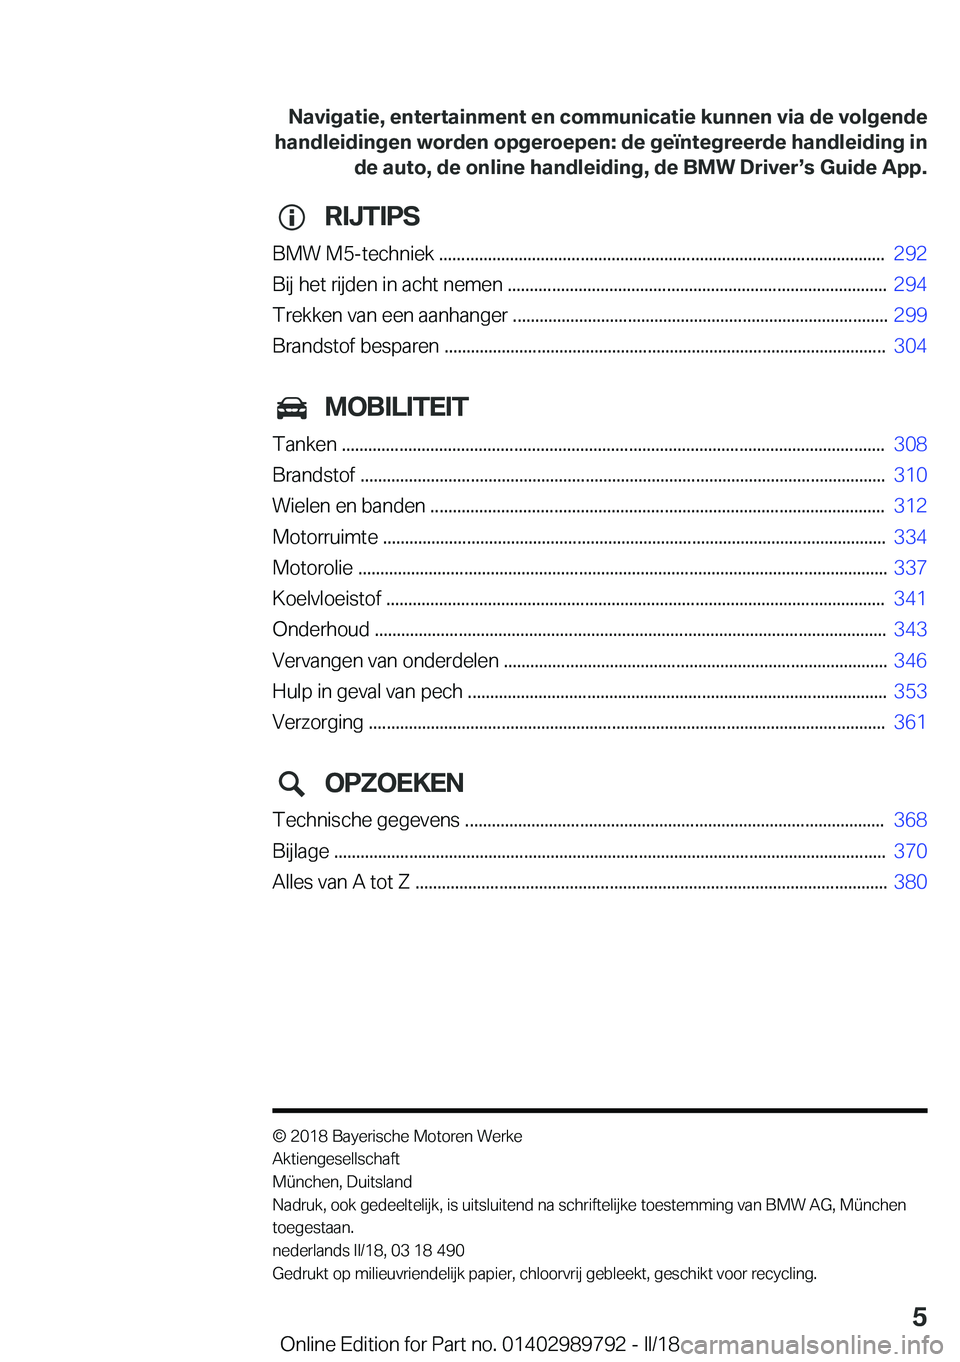 BMW M5 2018  Instructieboekjes (in Dutch) �R�I�J�T�I�P�S
�B�M�W� �M�5�-�t�e�c�h�n�i�e�k� �.�.�.�.�.�.�.�.�.�.�.�.�.�.�.�.�.�.�.�.�.�.�.�.�.�.�.�.�.�.�.�.�.�.�.�.�.�.�.�.�.�.�.�.�.�.�.�.�.�.�.�.�.�.�.�.�.�.�.�.�.�.�.�.�.�.�.�.�.�.�.�.�.�.�.�.�